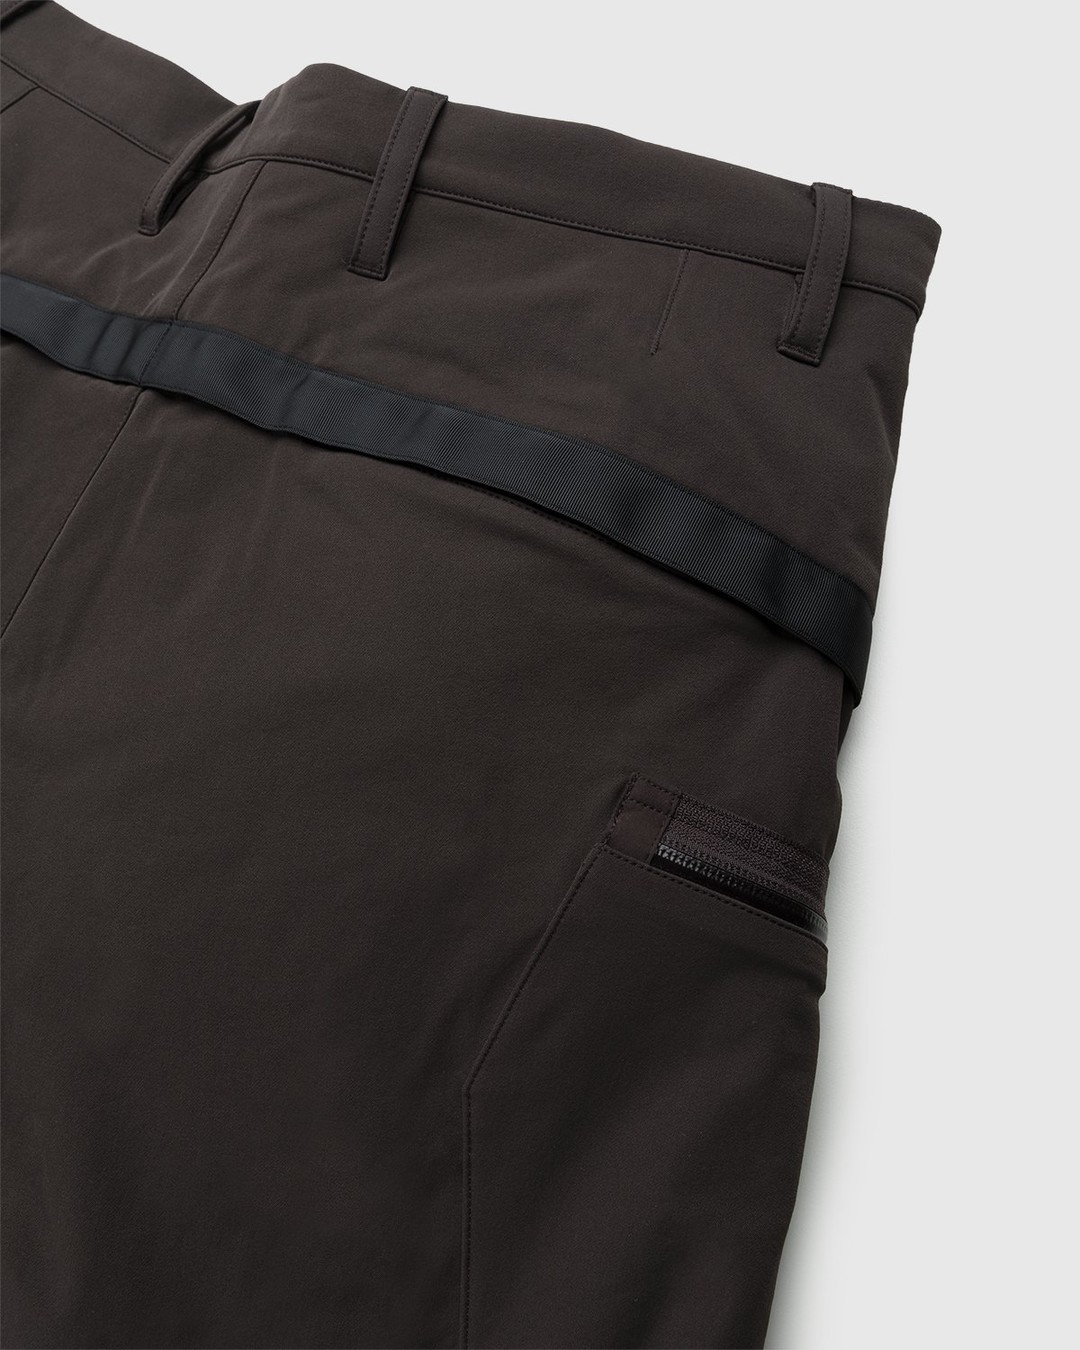 ACRONYM – P41-DS Pant Schwarzrot - Cargo Pants - Grey - Image 4